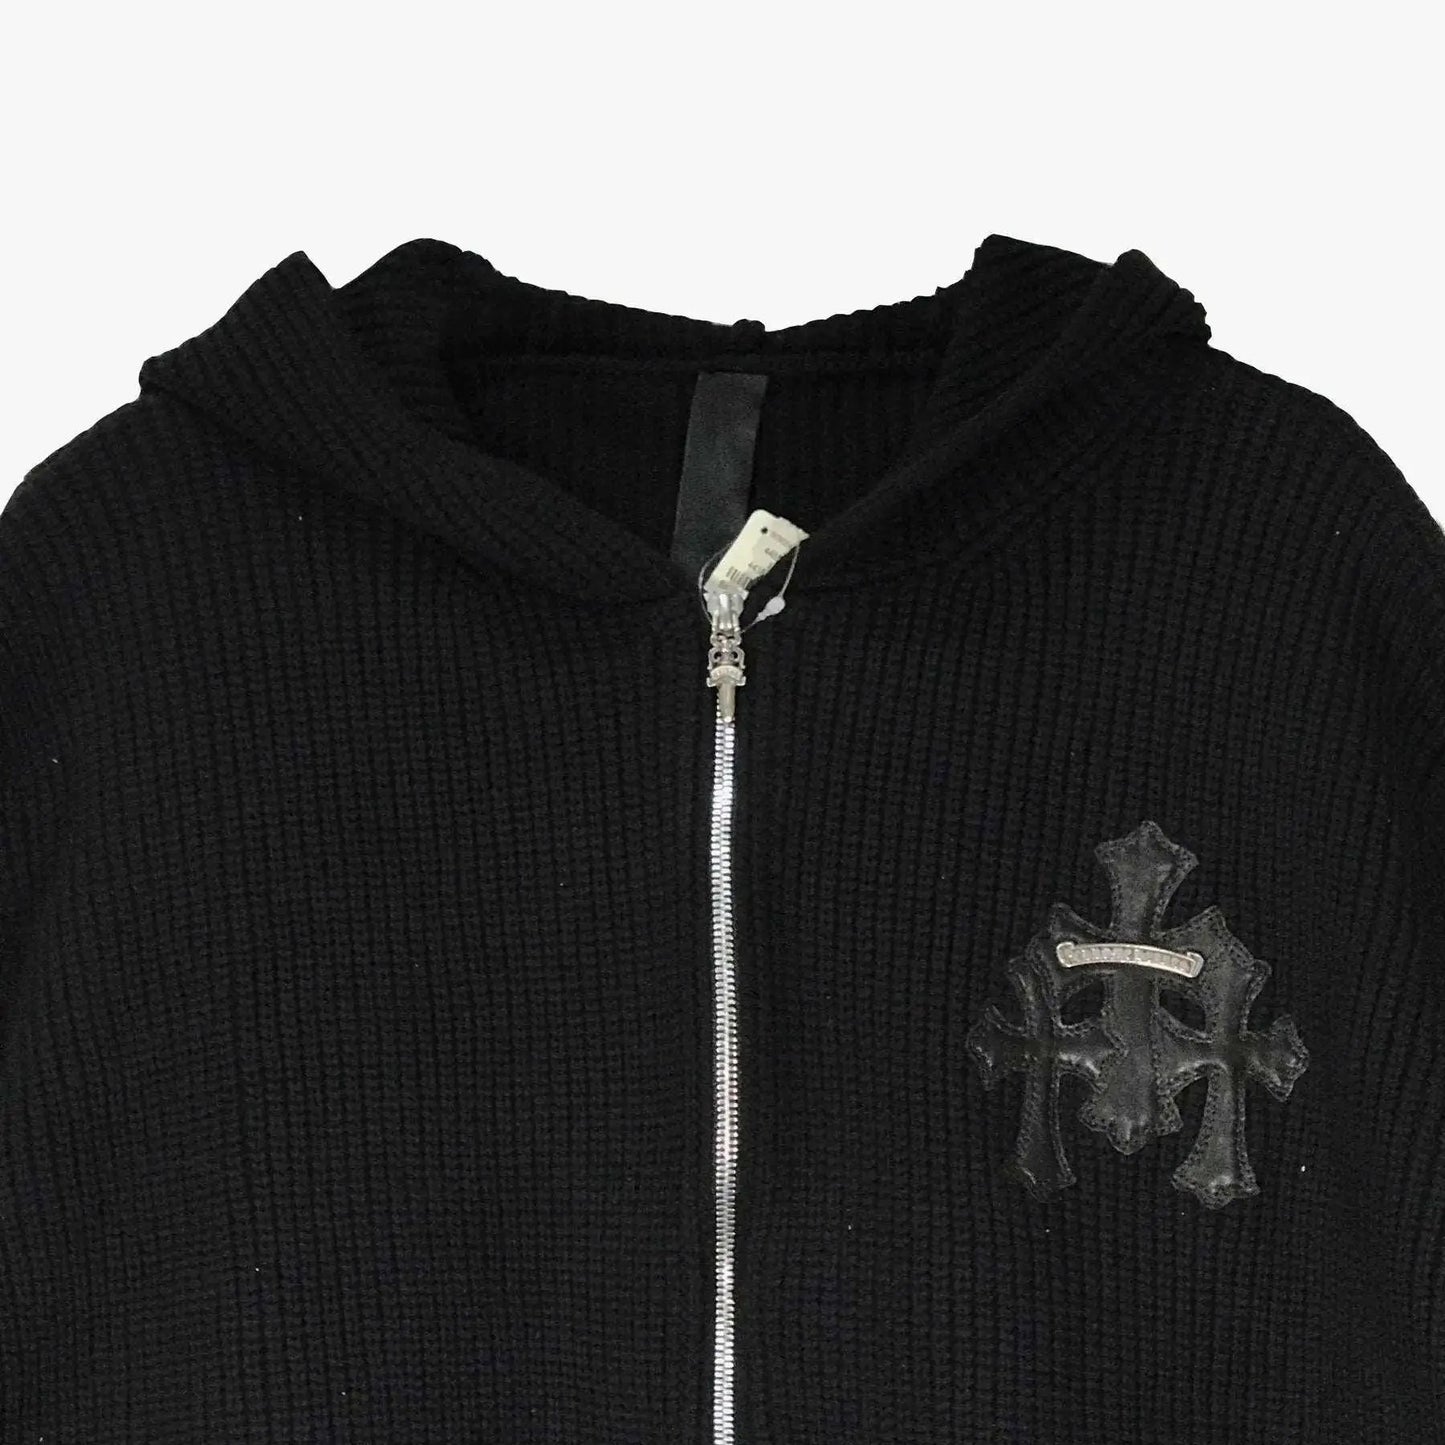 Chrome Hearts Black Cashmere Leather Cross Zip Up Hoodie Sweater - SHENGLI ROAD MARKET